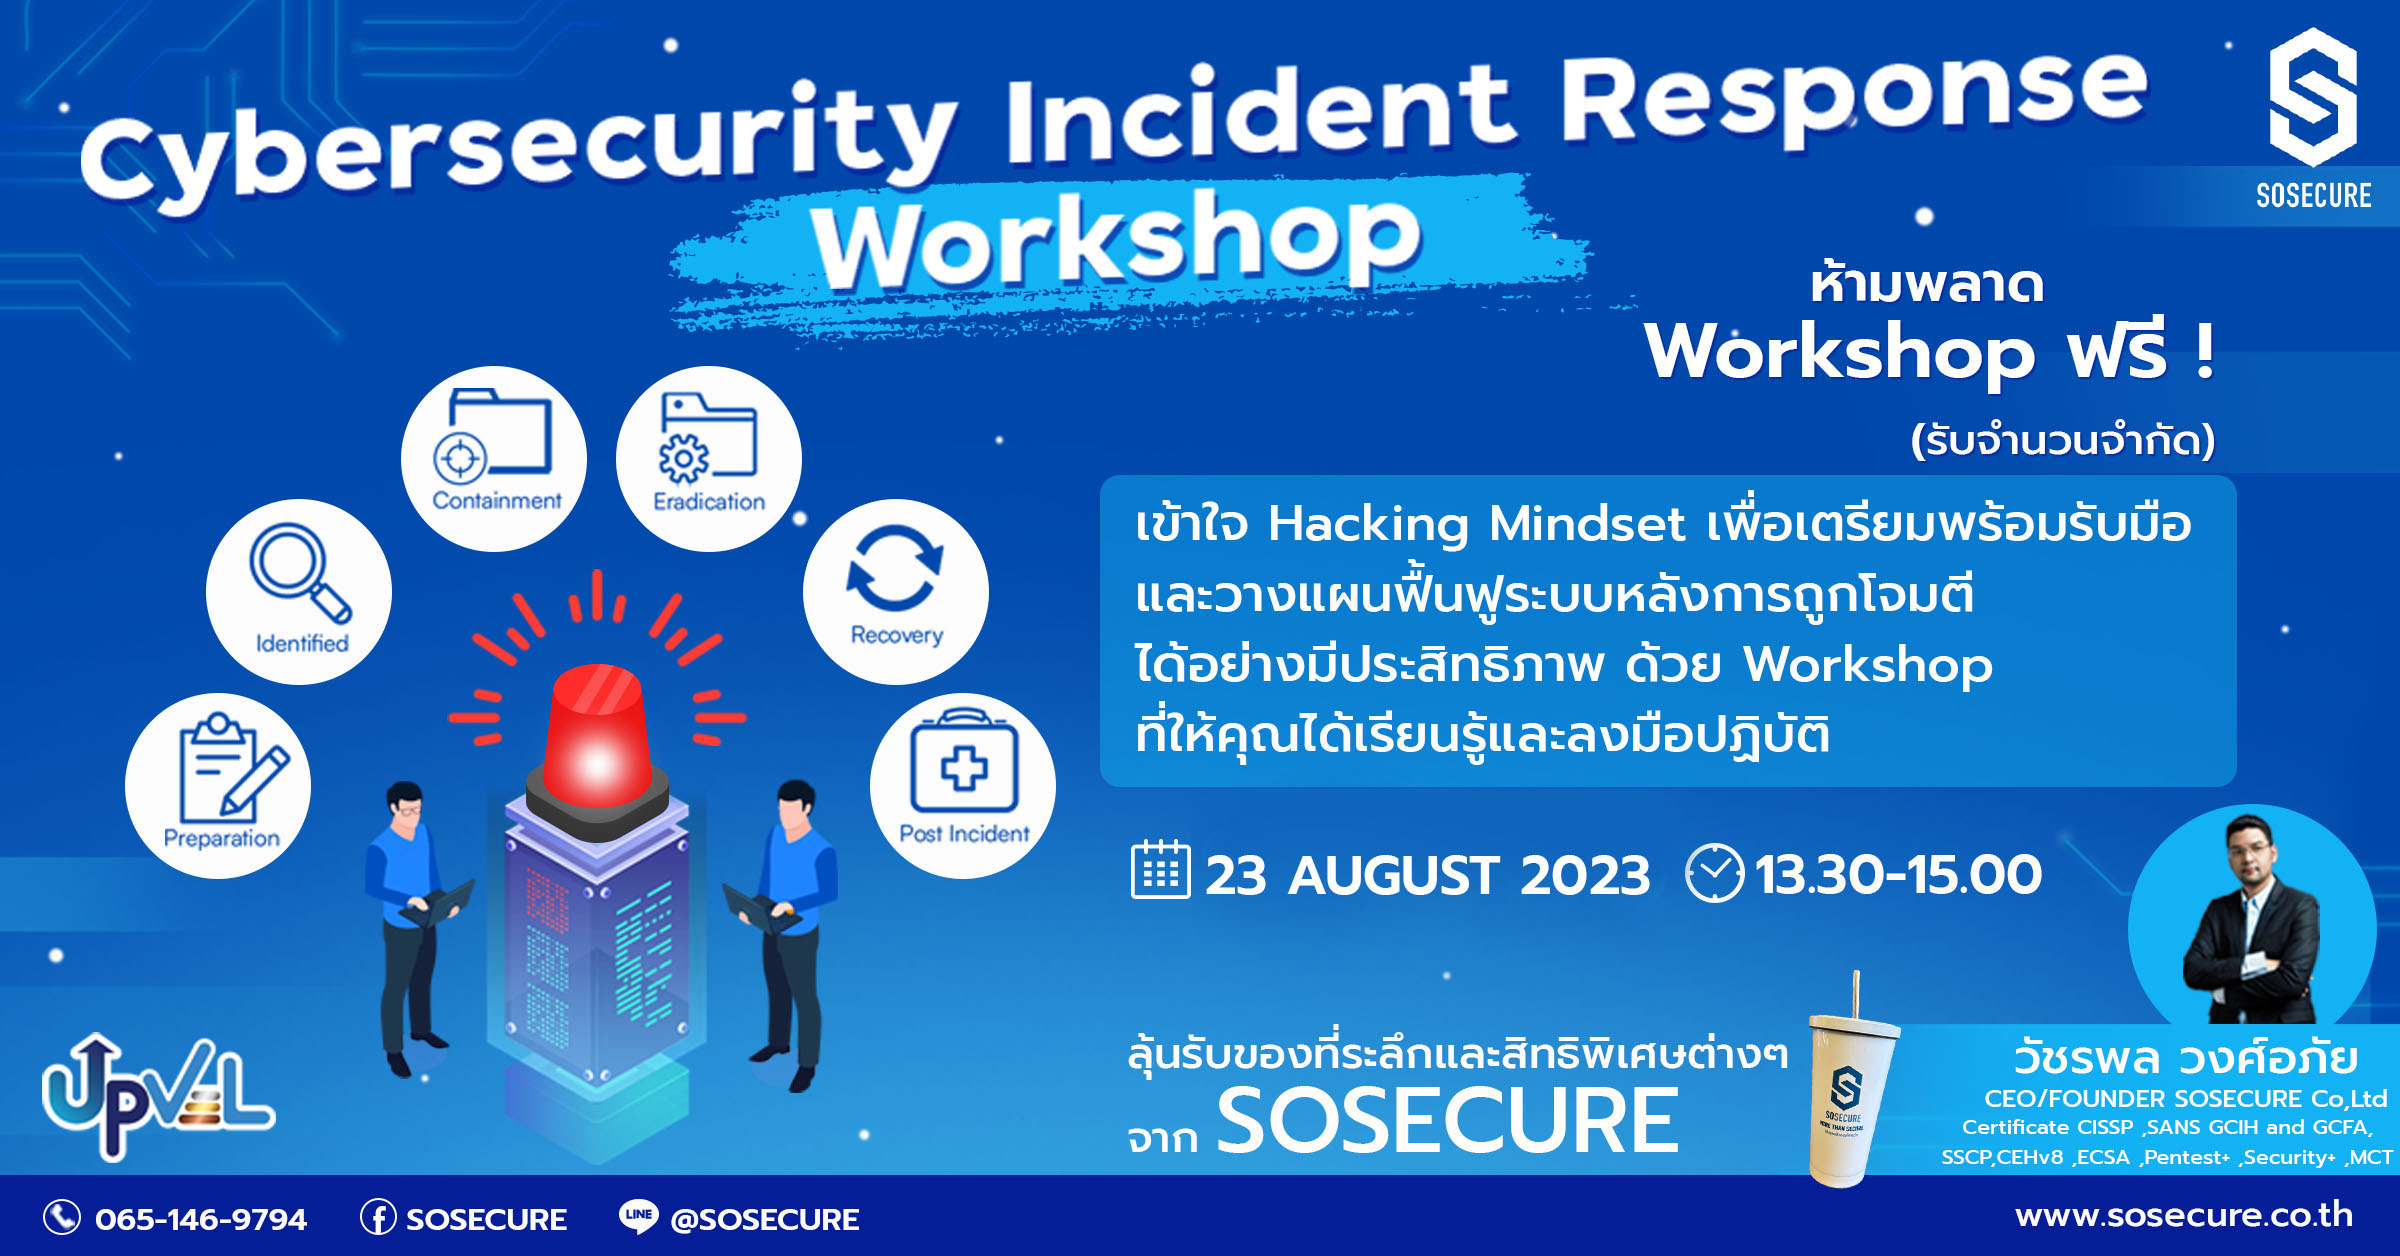 Cybersecurity Incident Response Workshop